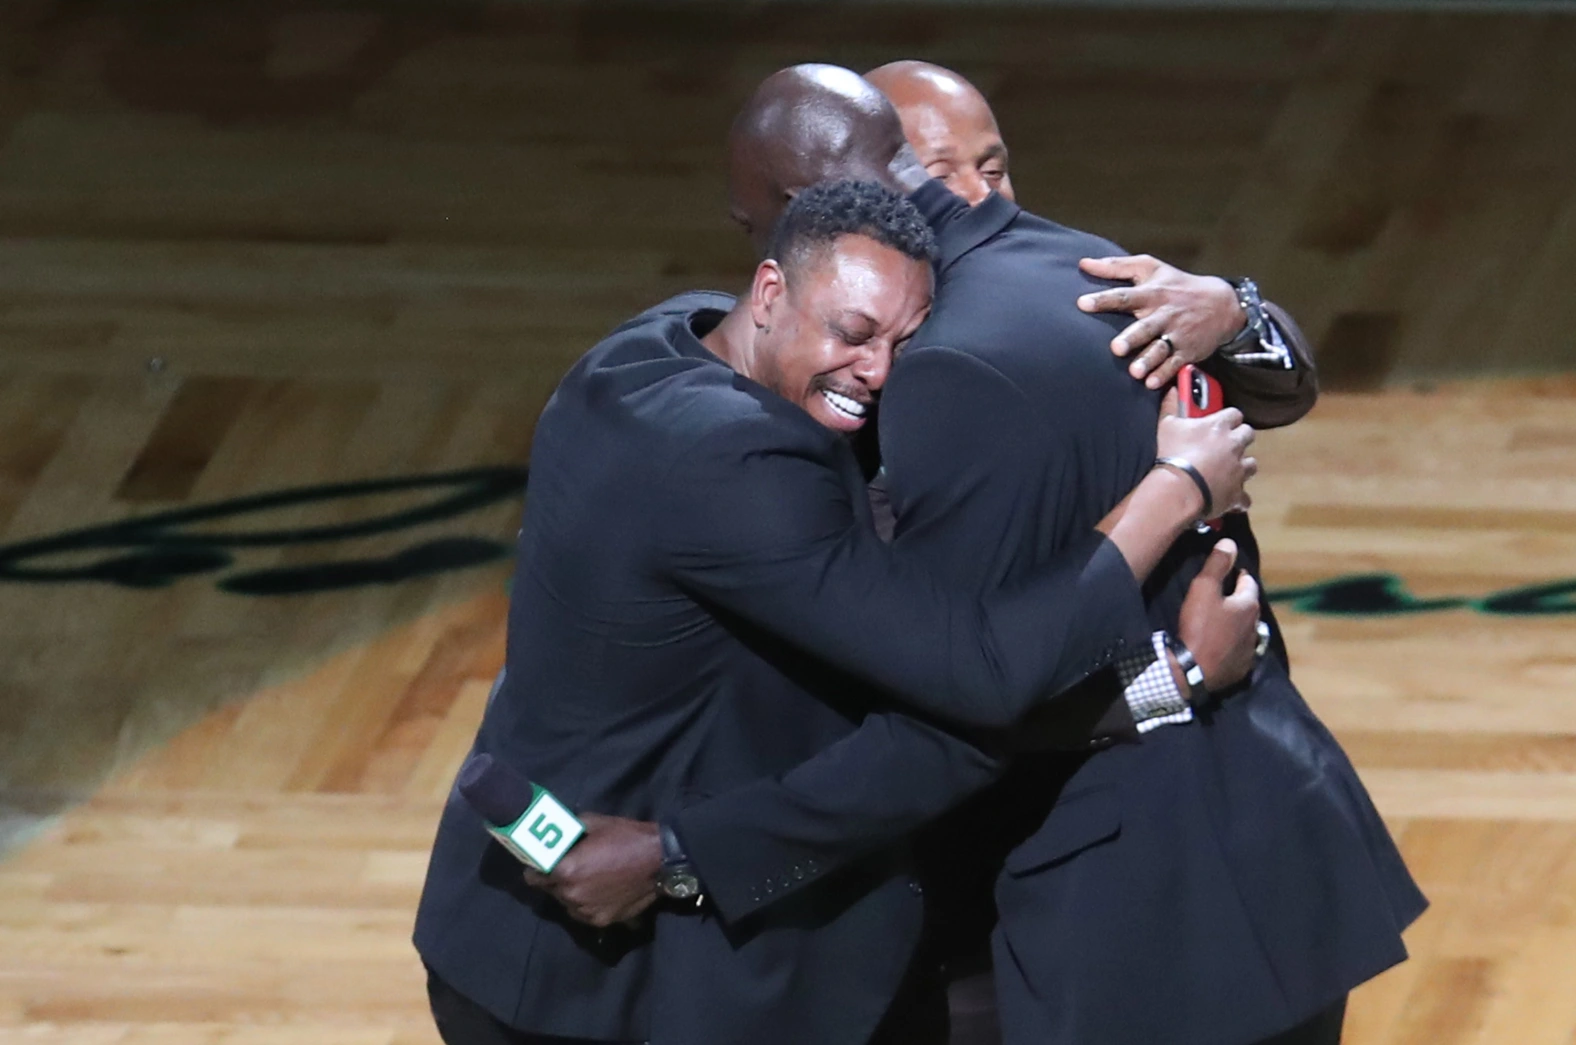 Boston Celtics retire Kevin Garnett's jersey number with ceremony